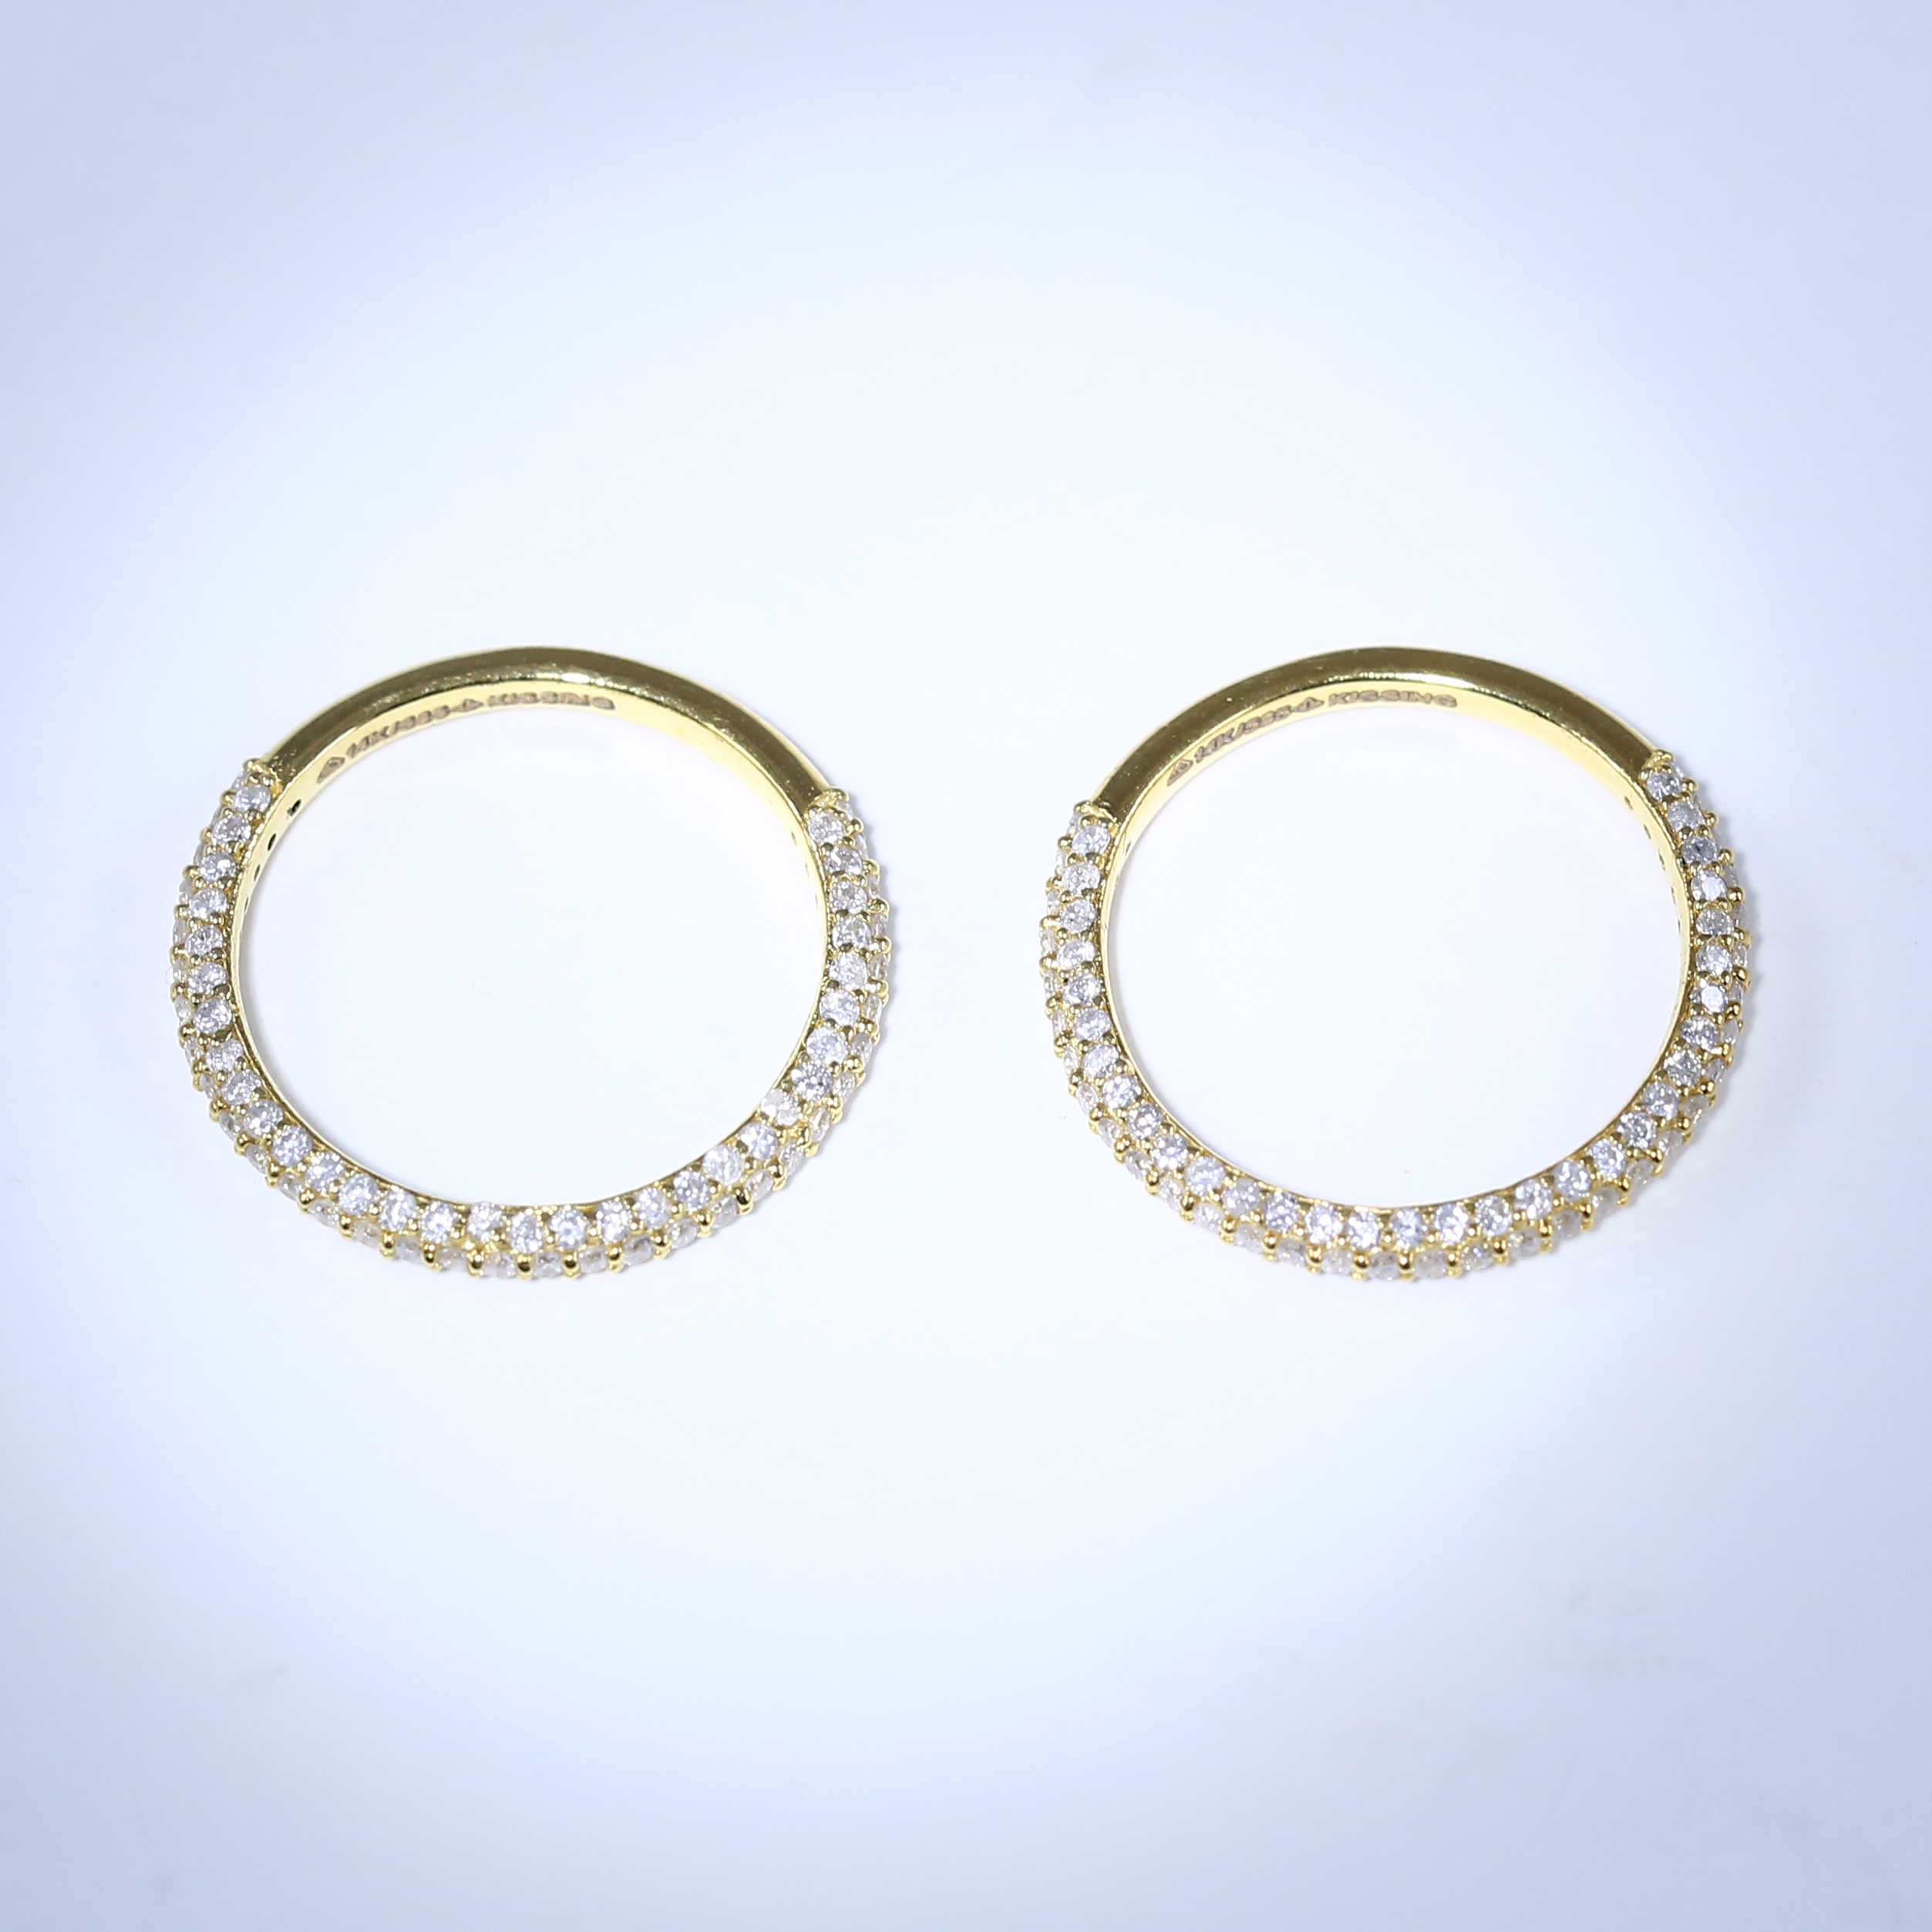 14 K / 585 Set of 2 Yellow Gold Engaement / Wedding Diamond Band Rings - Image 8 of 9